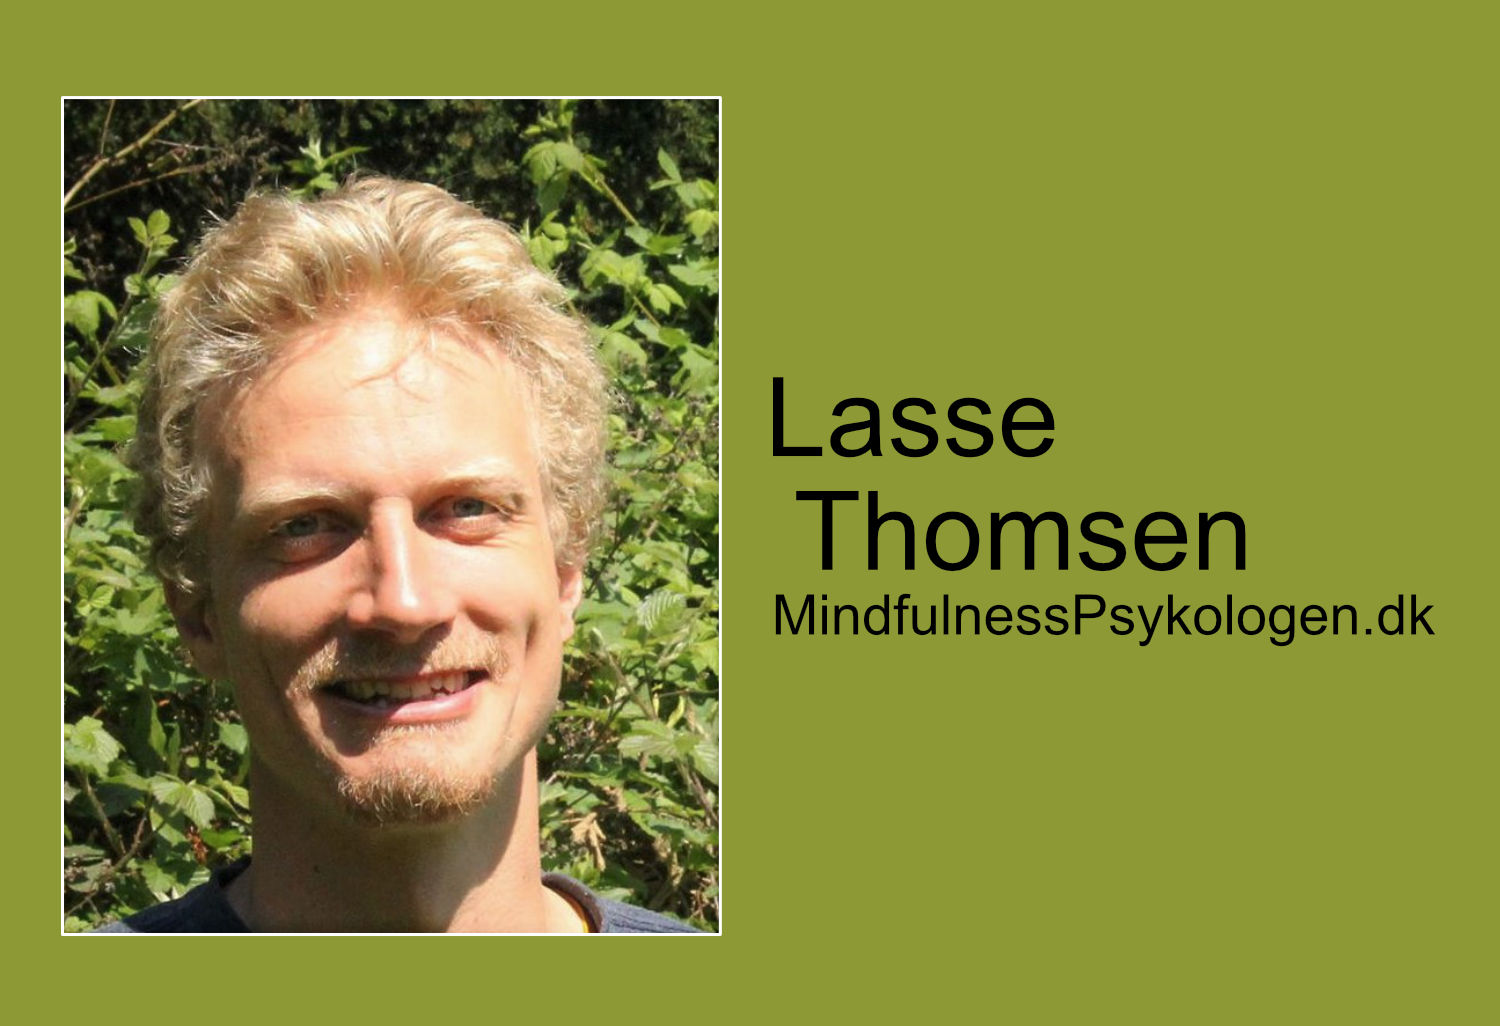 Lasse Thomsen